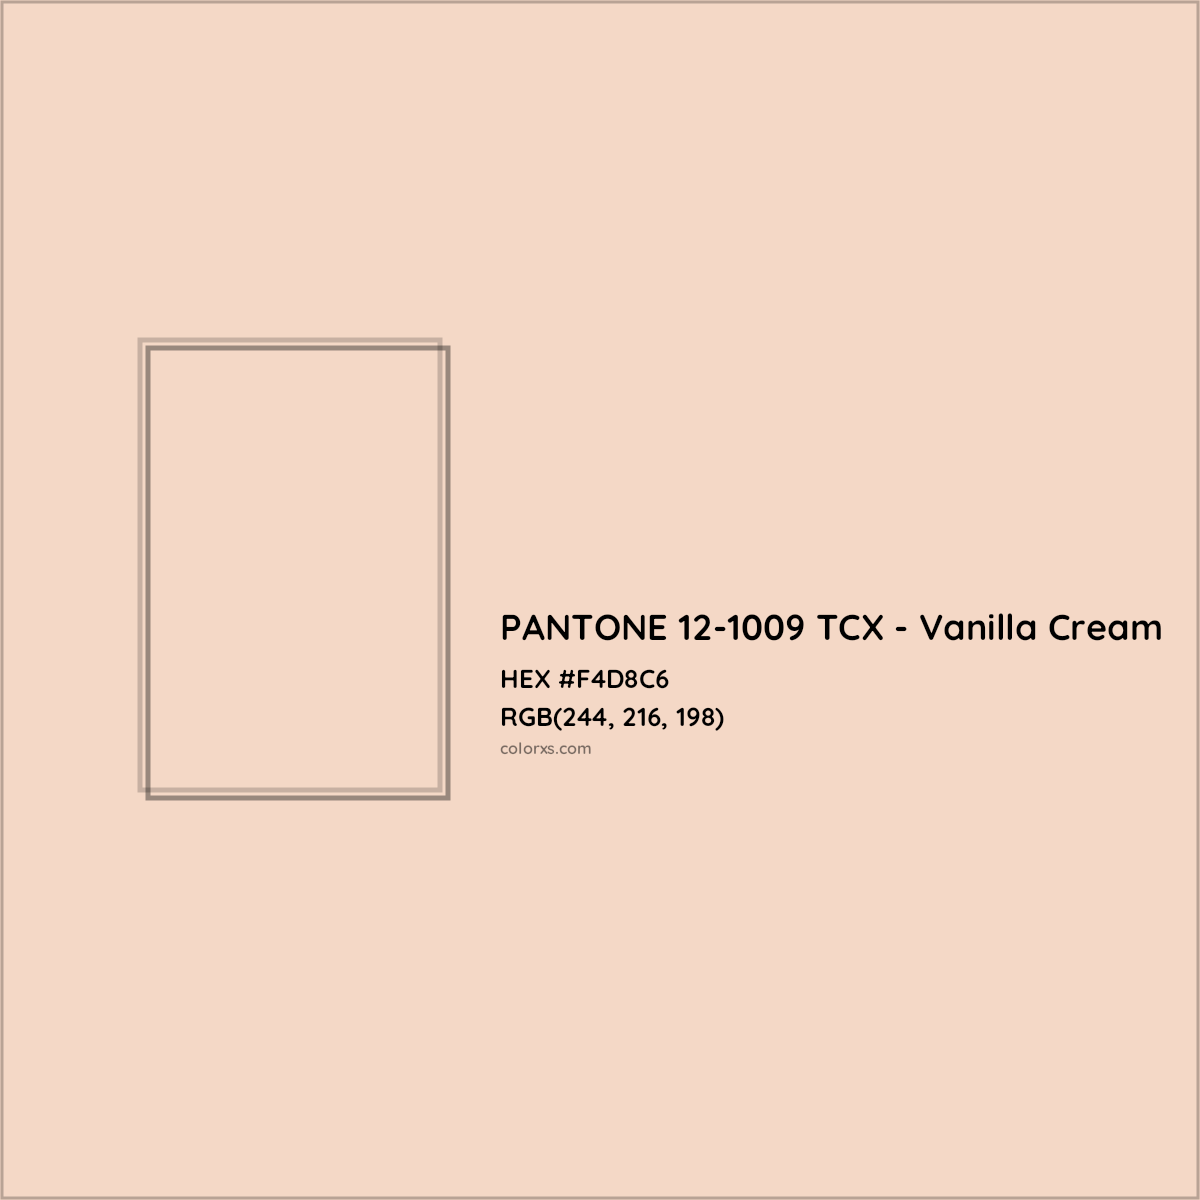 HEX #F4D8C6 PANTONE 12-1009 TCX - Vanilla Cream CMS Pantone TCX - Color Code